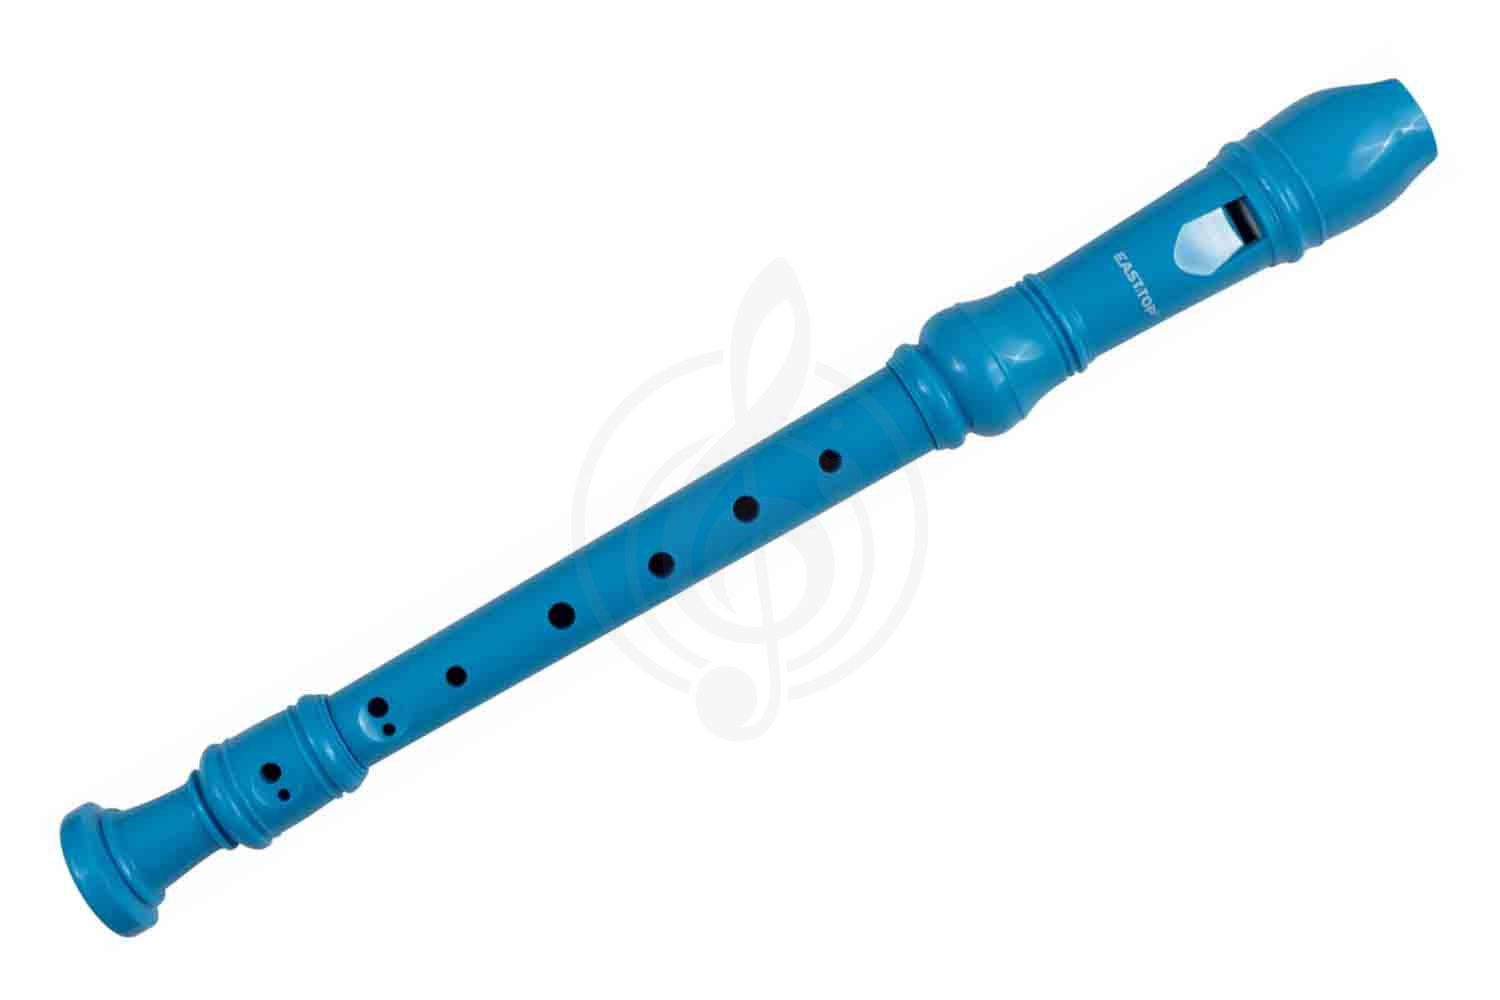 Набор шумовых инструментов EASTTOP DF300 BLUE - Набор инструментов 3 предмета, EASTTOP DF300 BLUE в магазине DominantaMusic - фото 15